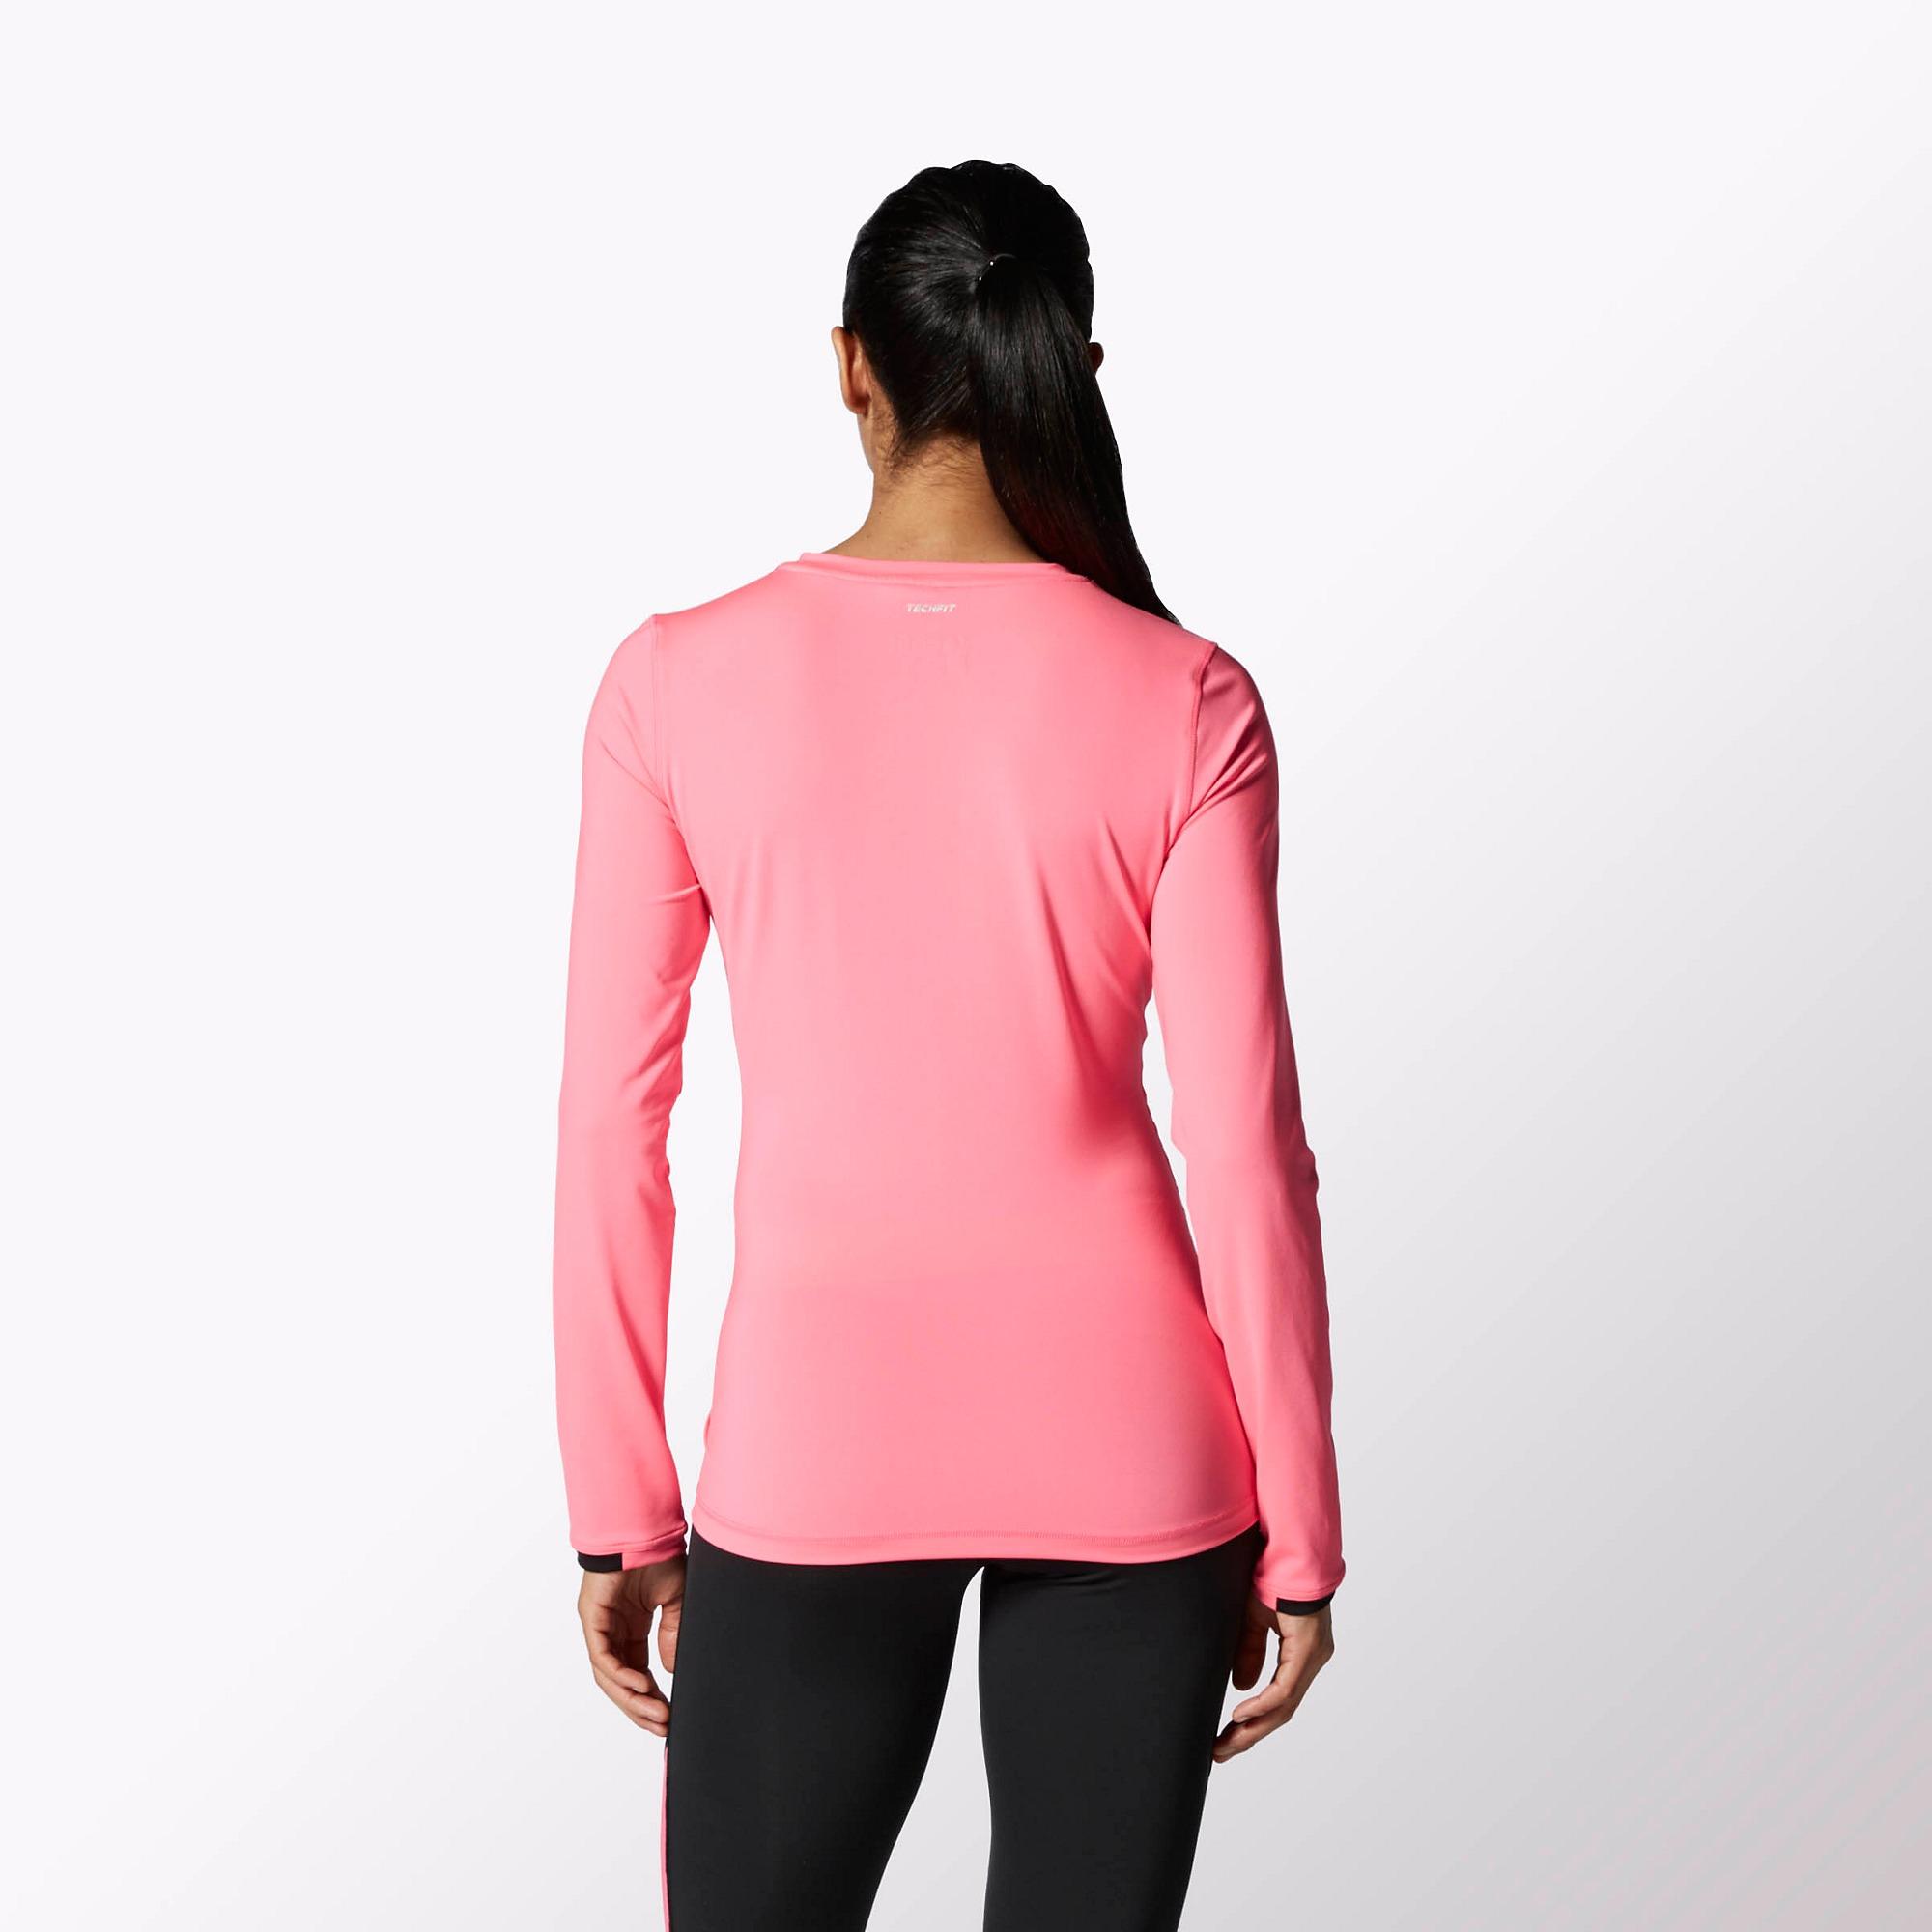 Adidas Womens Techfit Long Sleeve Top - Solar Pink - Tennisnuts.com